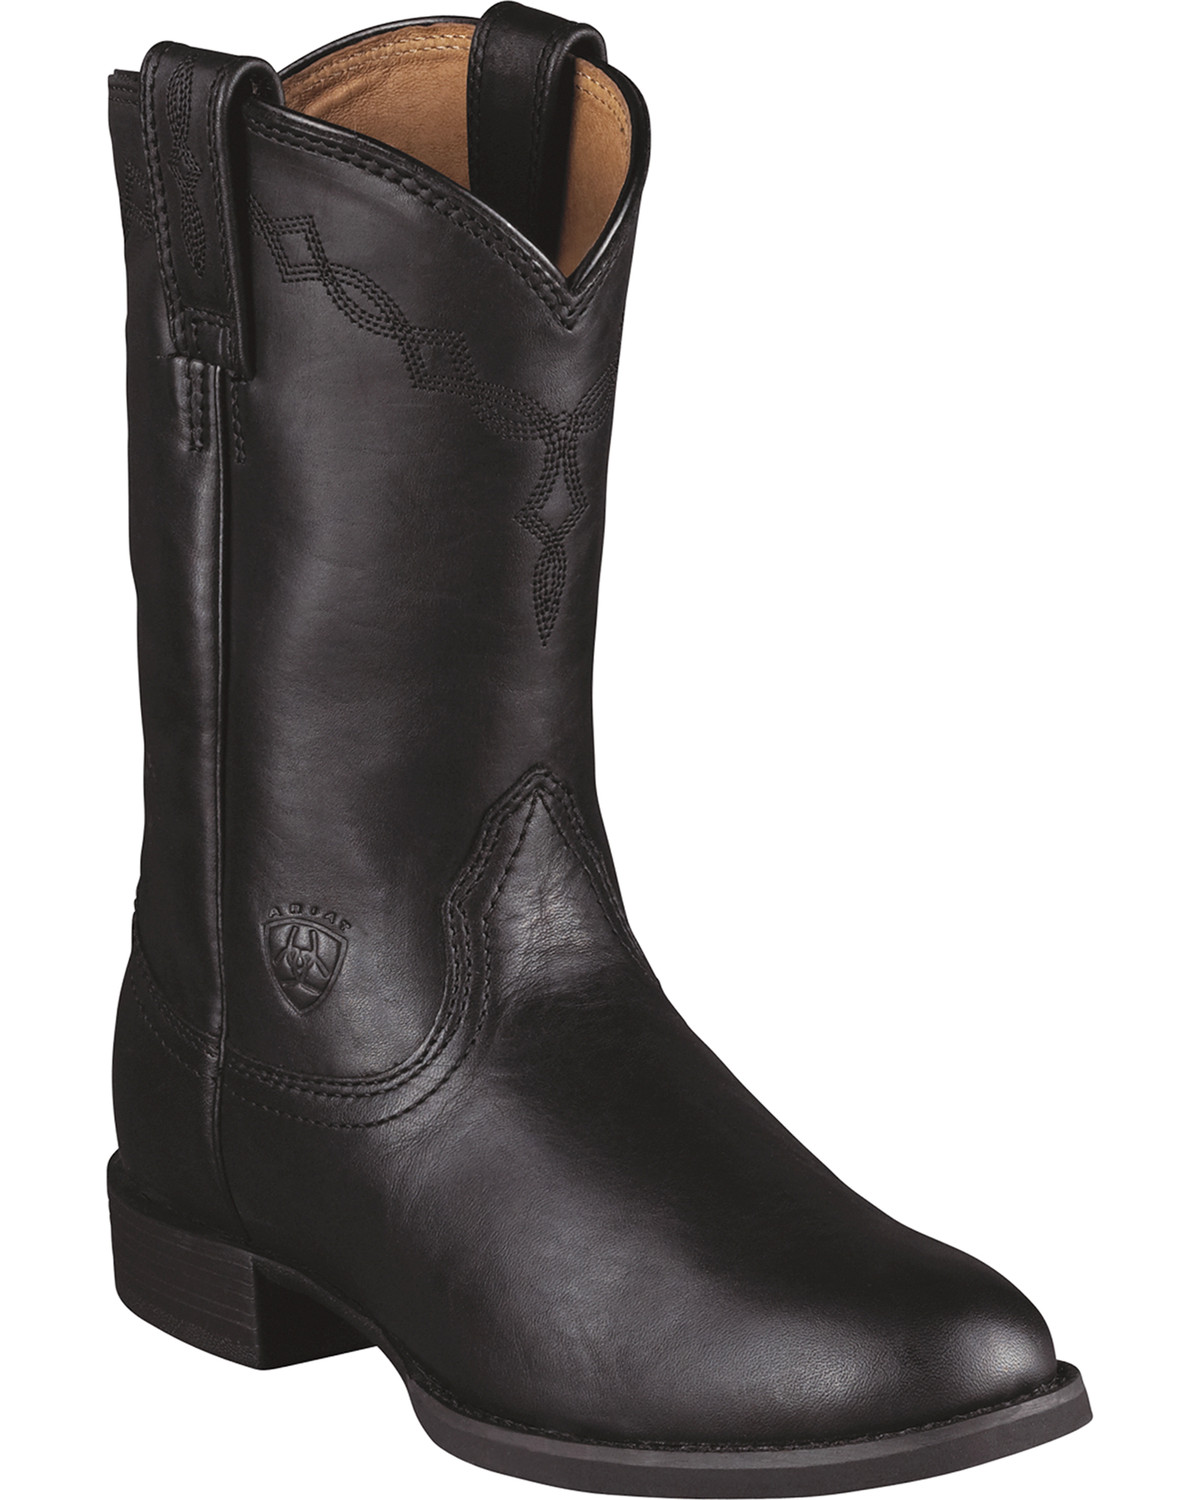 Ariat Women's Heritage Roper Western Boots - Round Toe